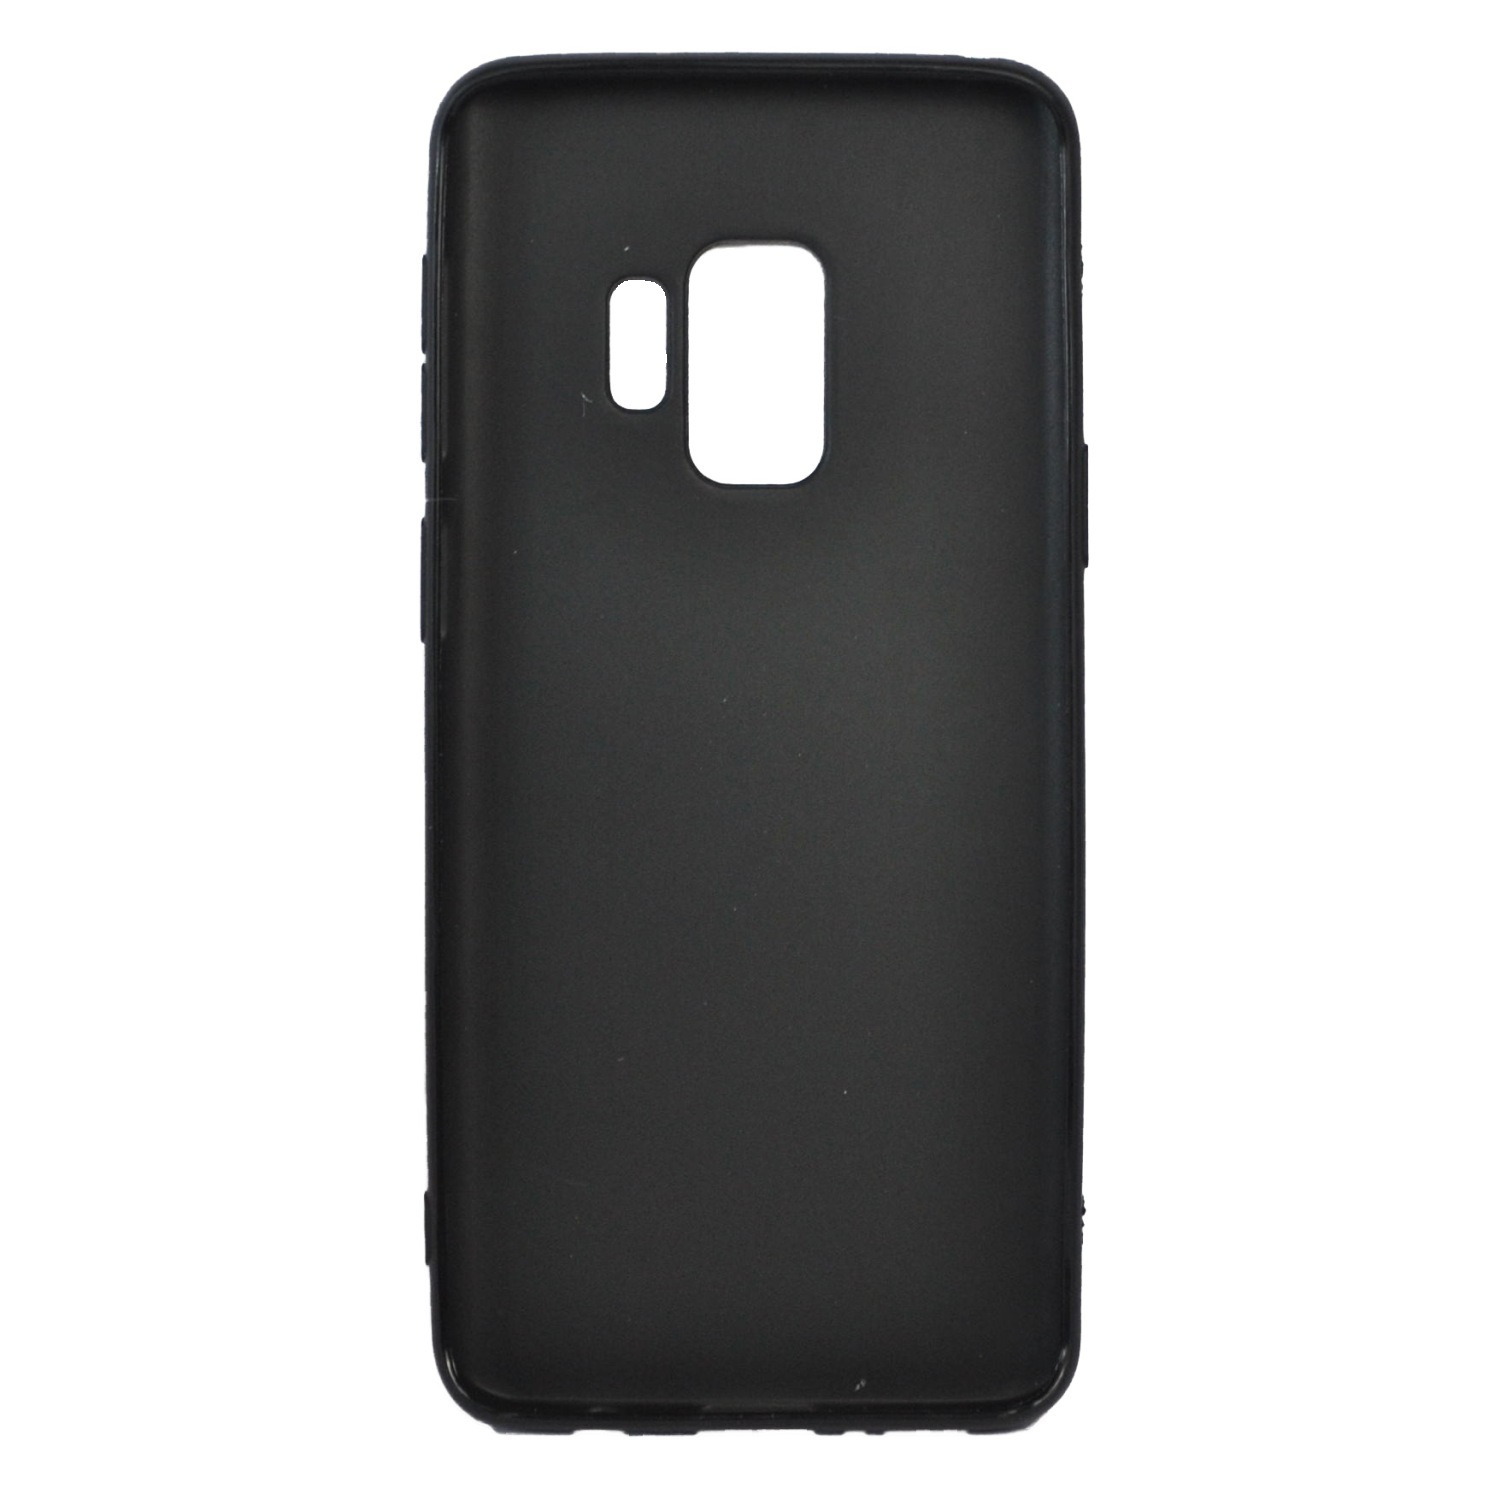 Husa Samsung S9 Spacer, negru, grosime 1 mm, material flexibil TPU, ColorFull Matt Ultra negru „SPT-MUT-SA.S9”